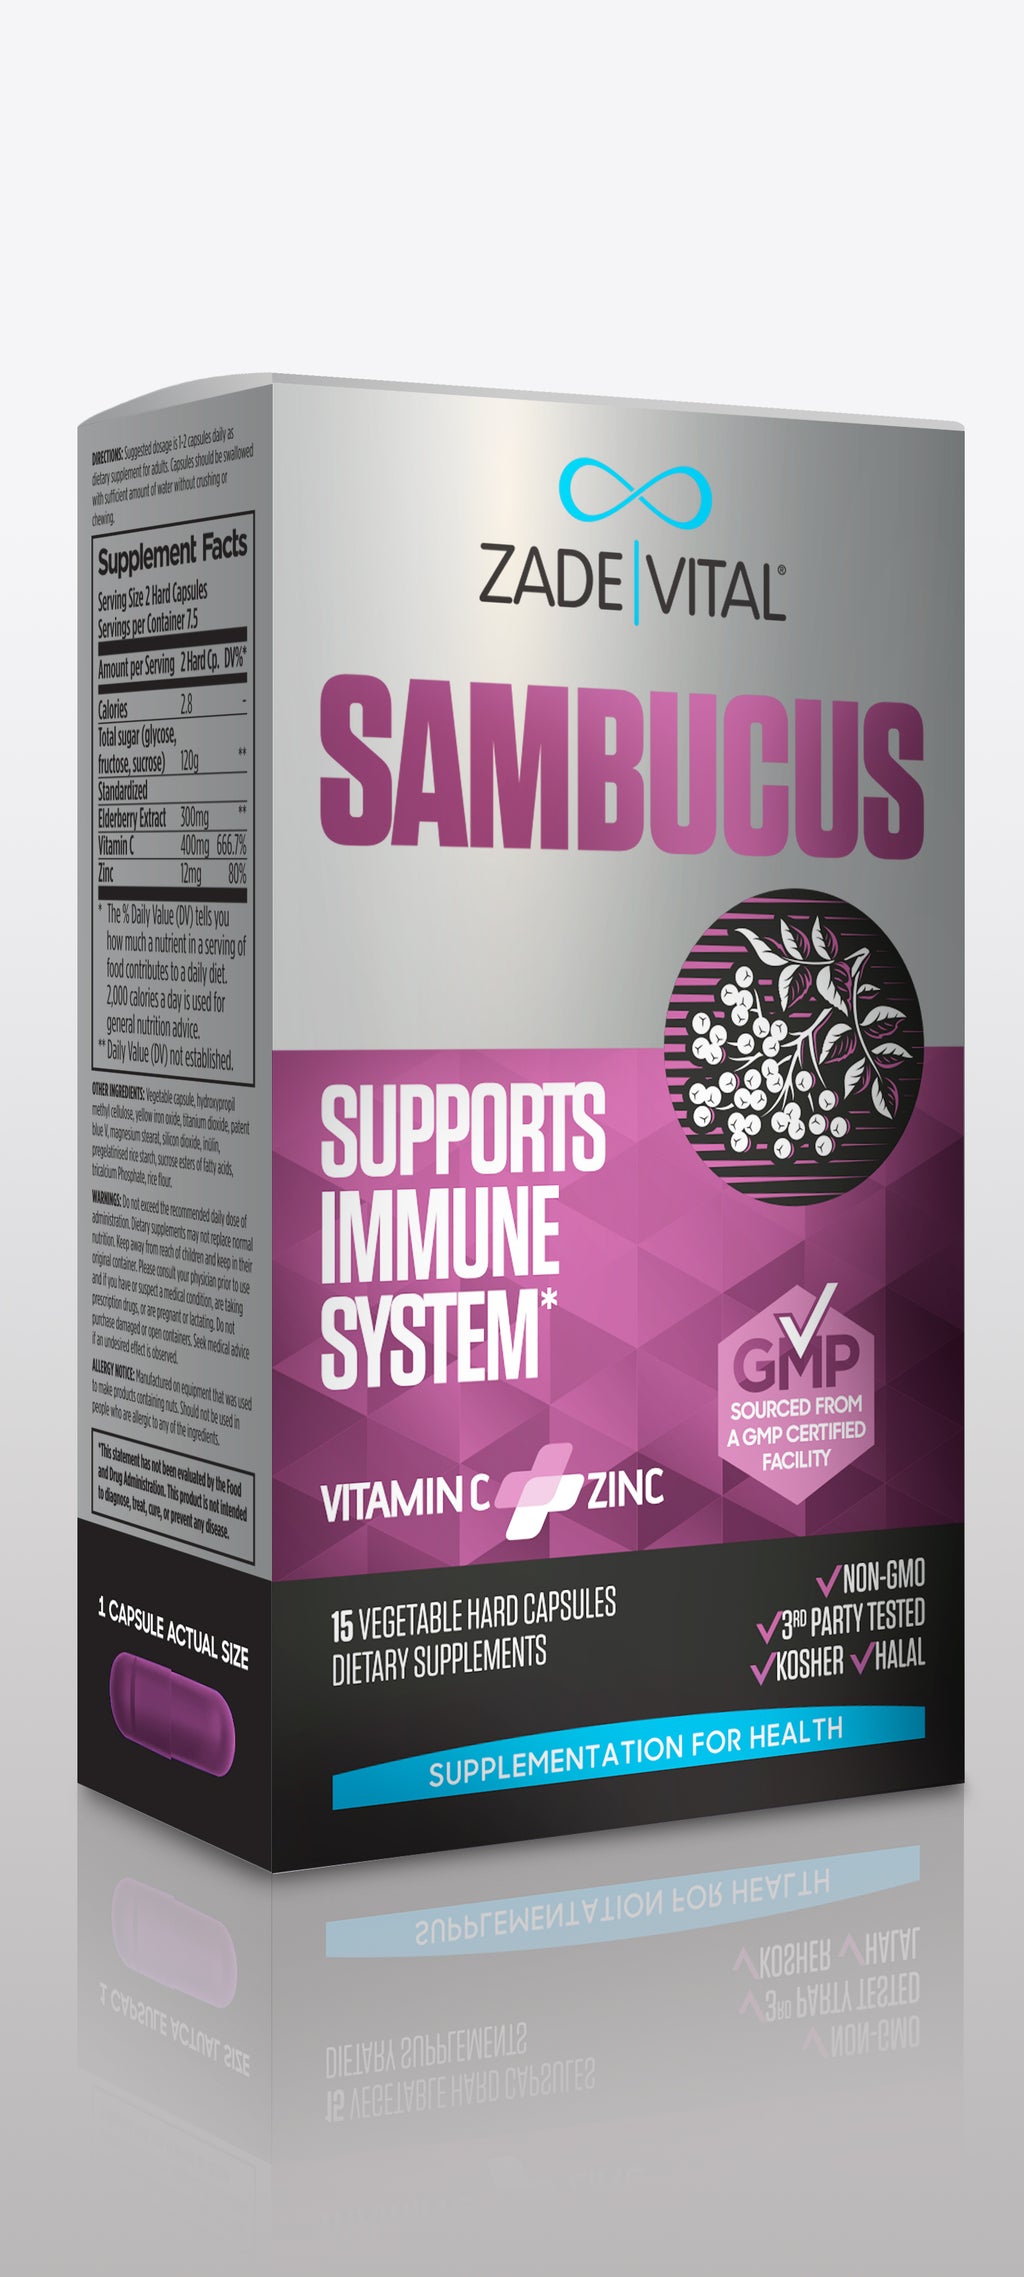 Sambucus, Vitamin C and Zinc